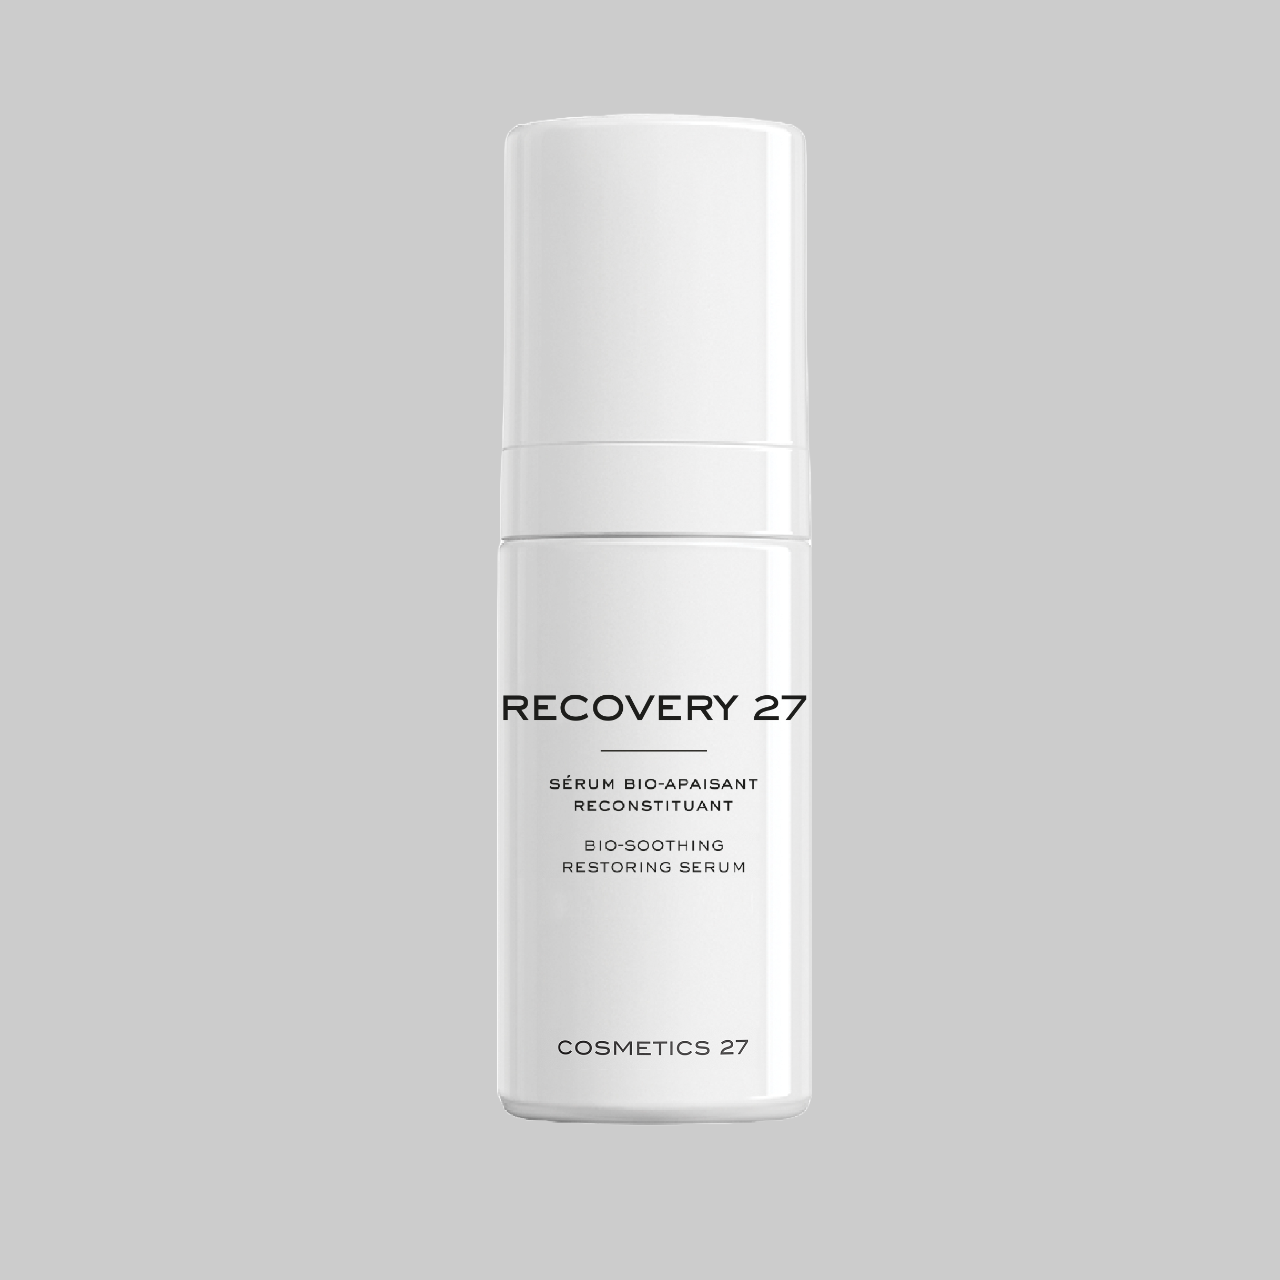 bottle of recovery 27 restoring serum